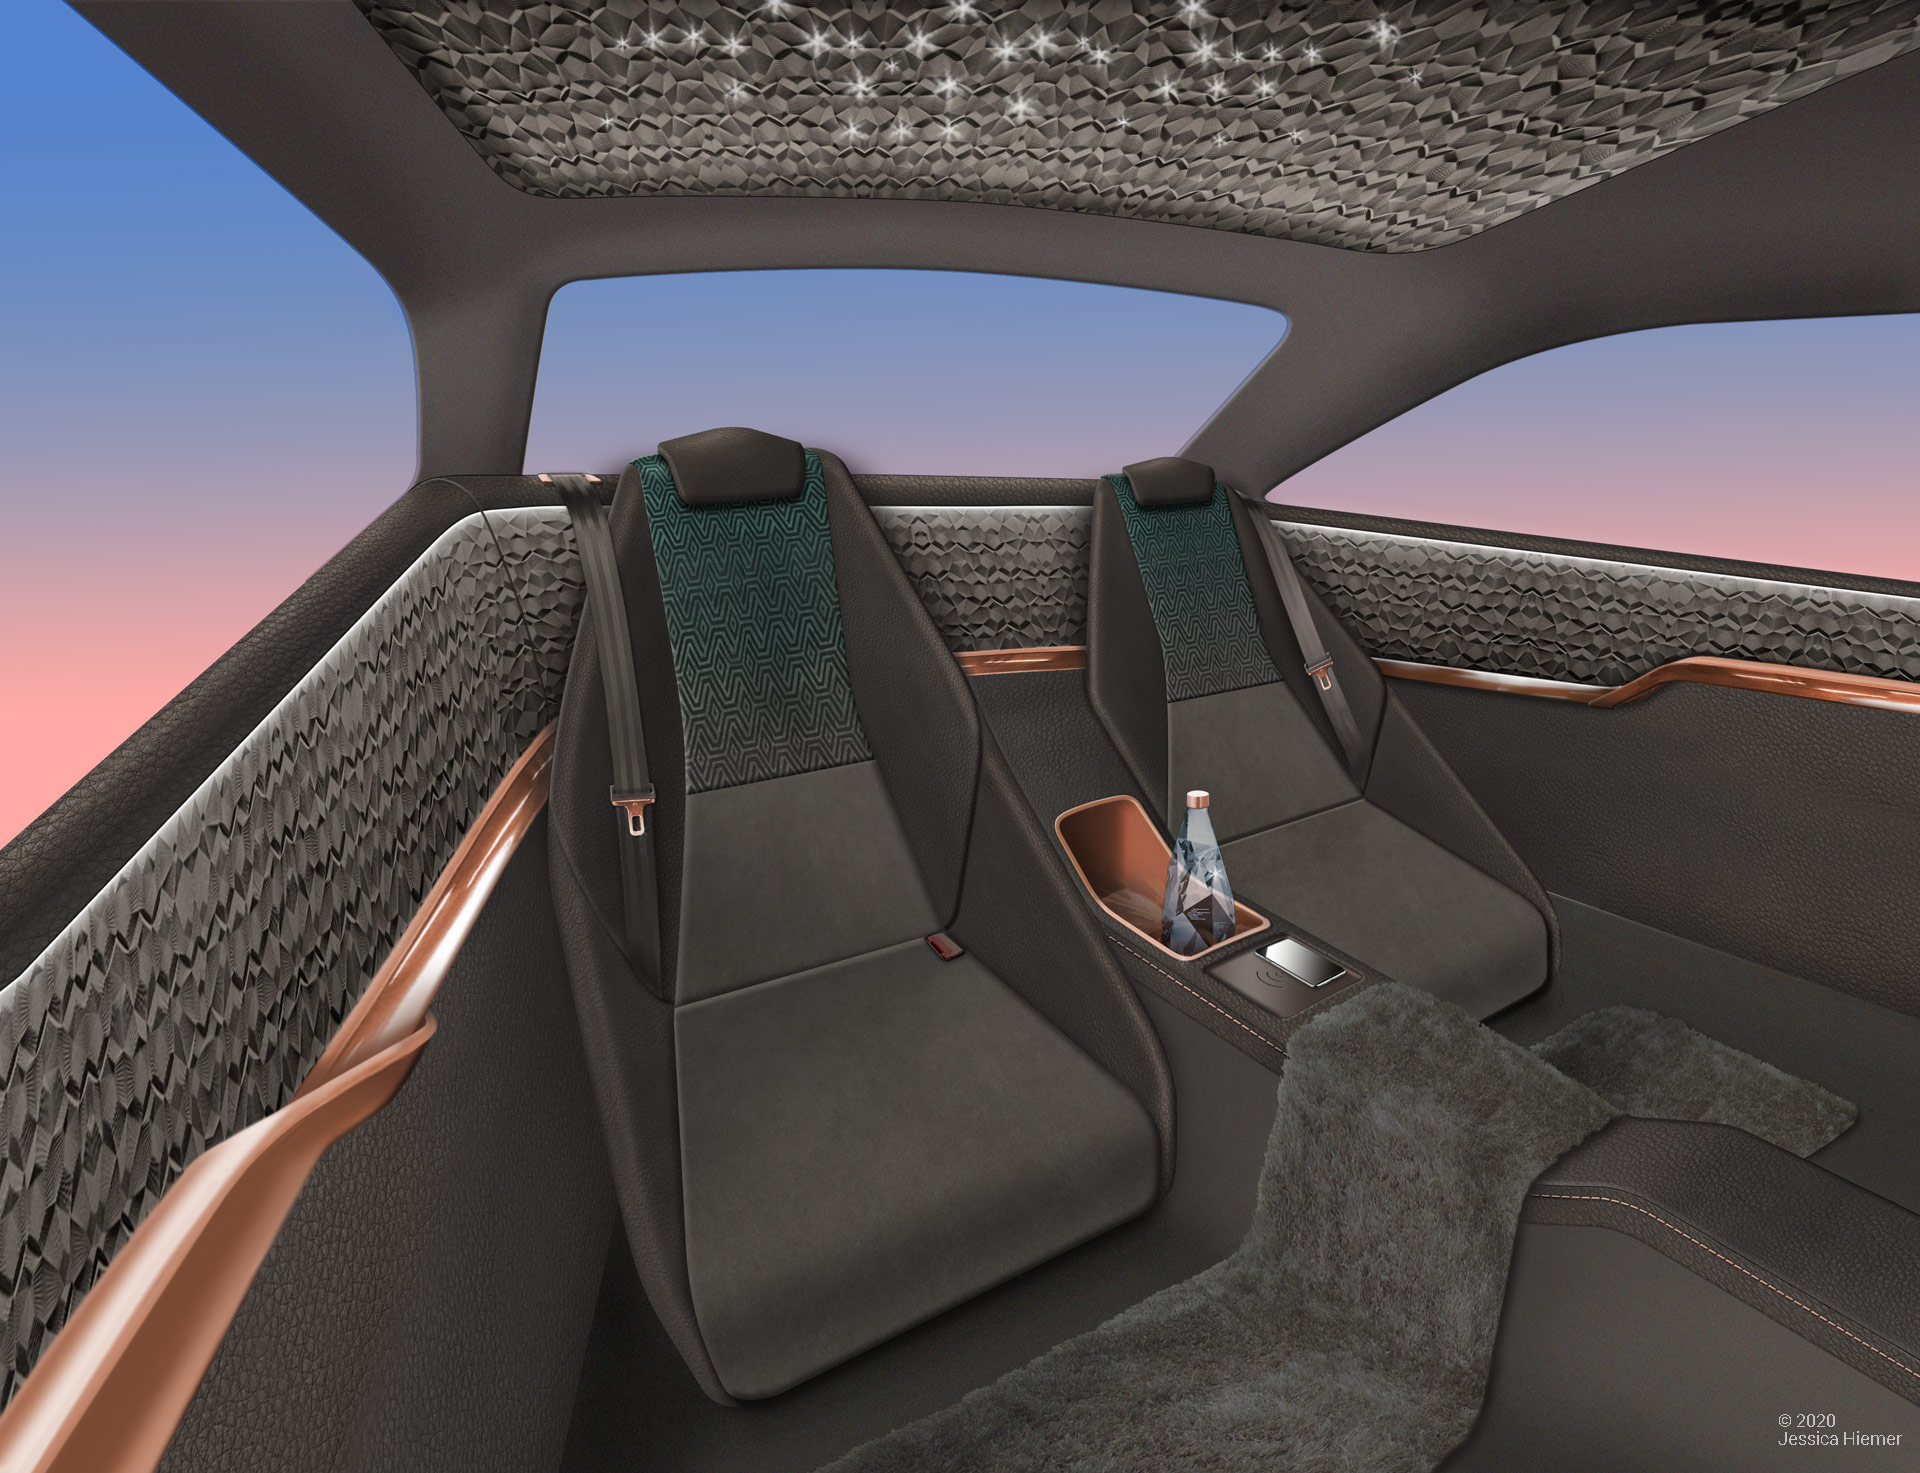 Automotive Interior Concept - Product Design Portfolio - J. Hiemer